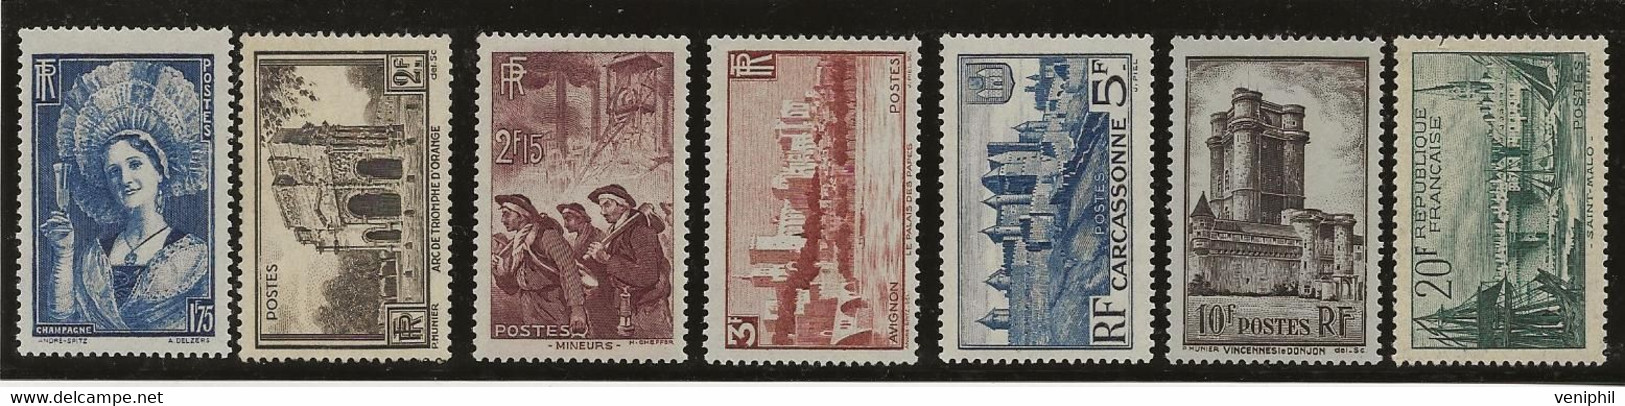 FRANCE  SERIE N° 388 A 394 NEUVE SANS CHARNIERE -ANNEE 1938 - COTE : 165 € - Unused Stamps